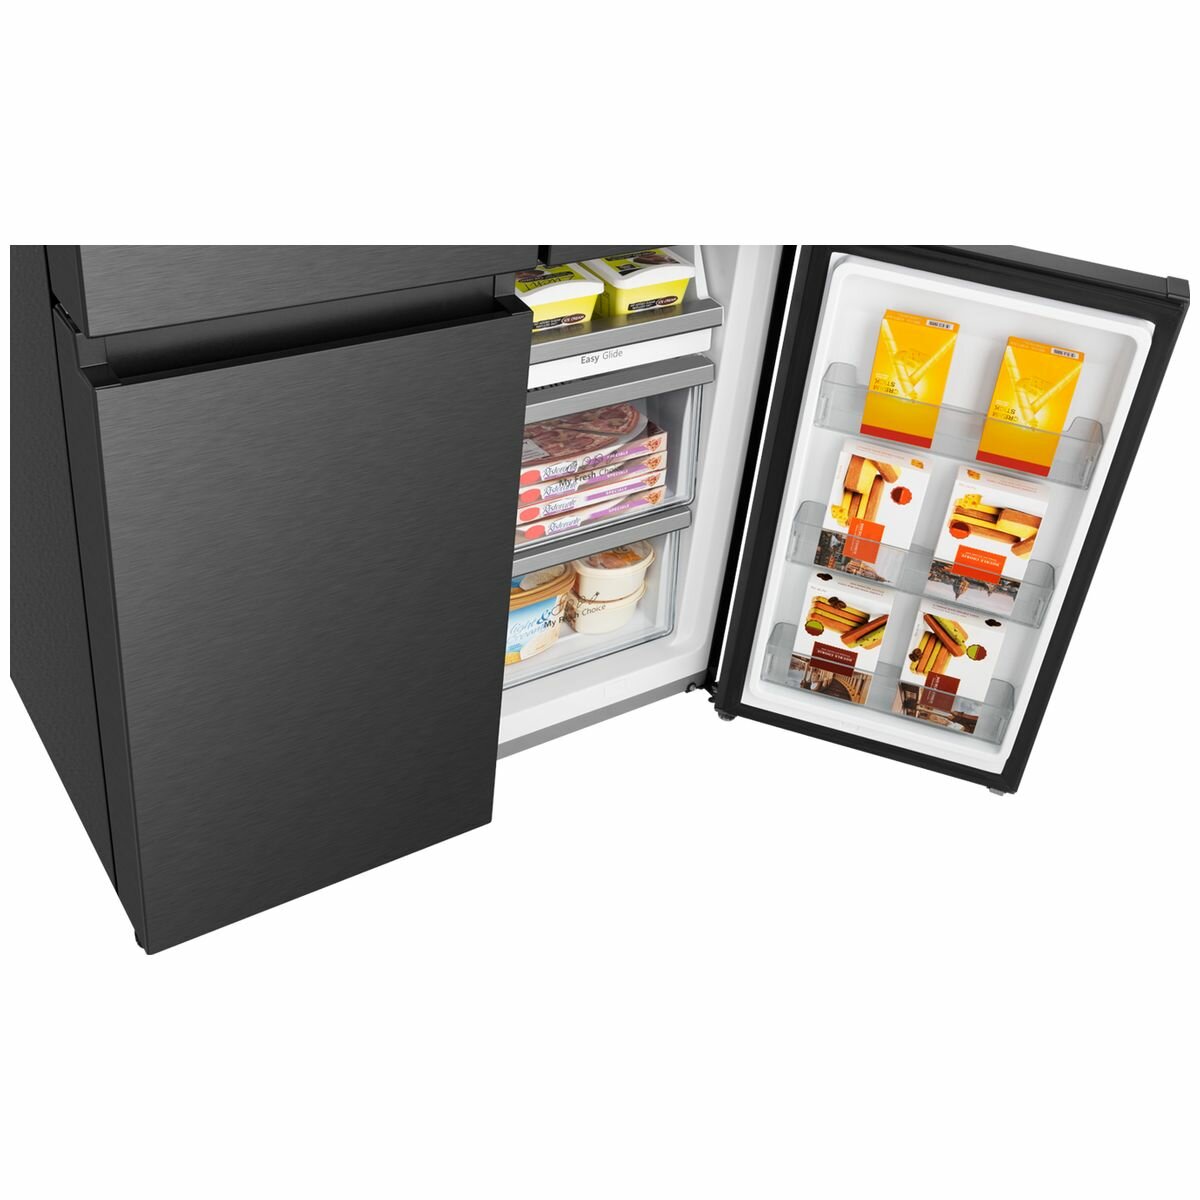 hisense-585l-french-door-refrigerator-hrcd585bw-10-70f4a8a8-high